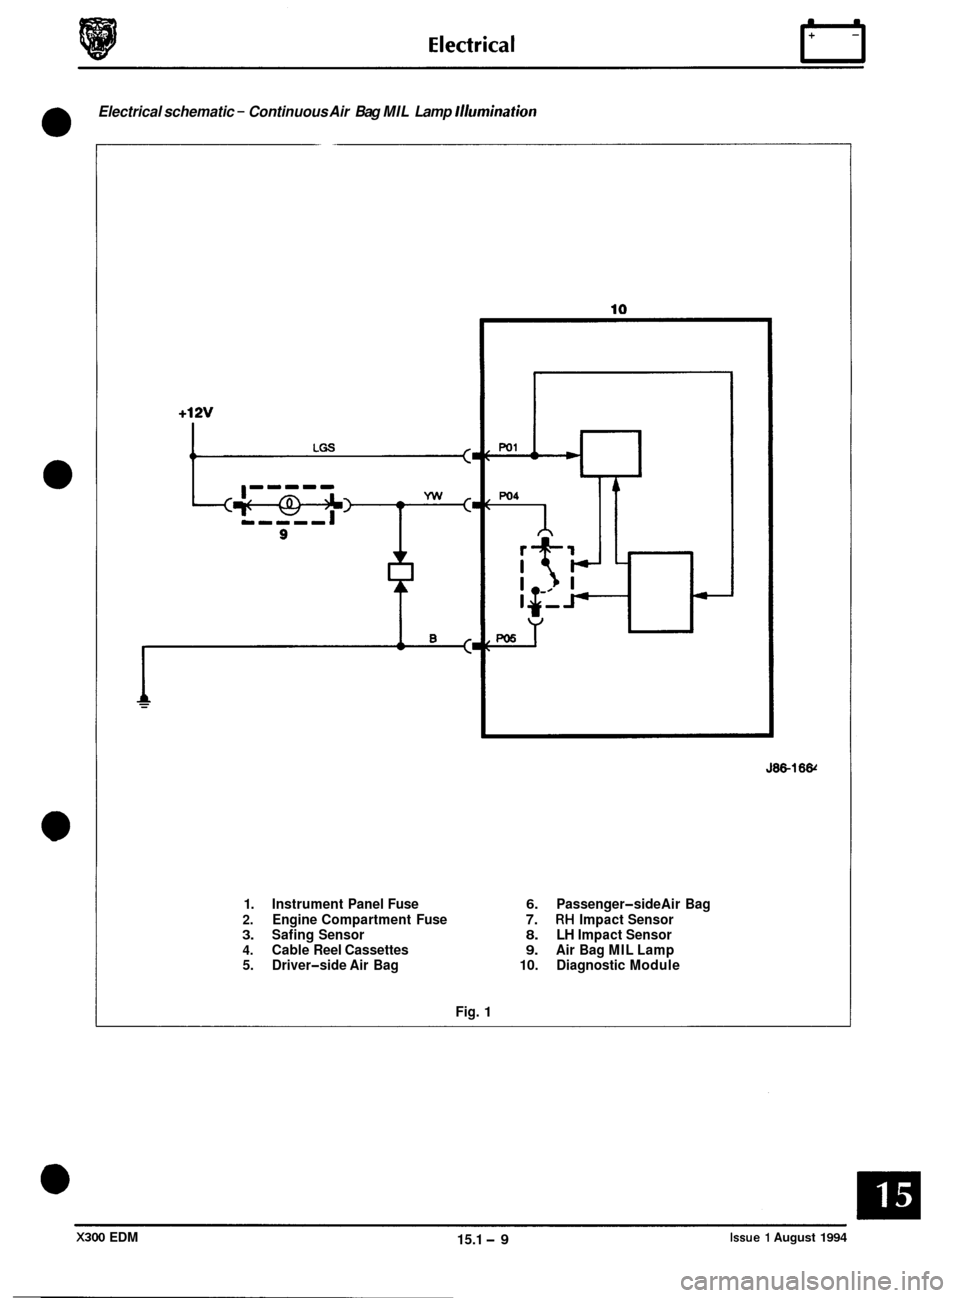 JAGUAR XJ6 1994 2.G Electrical Diagnostic Manual Electrical schematic - Continuous Air Bag MIL  Lamp Illumination 
0 
J86-16& 
1. Instrument  Panel Fuse 
2. Engine  Compartment  Fuse 3. Safing Sensor 4. Cable Reel Cassettes 
5.  Driver-side Air  Bag